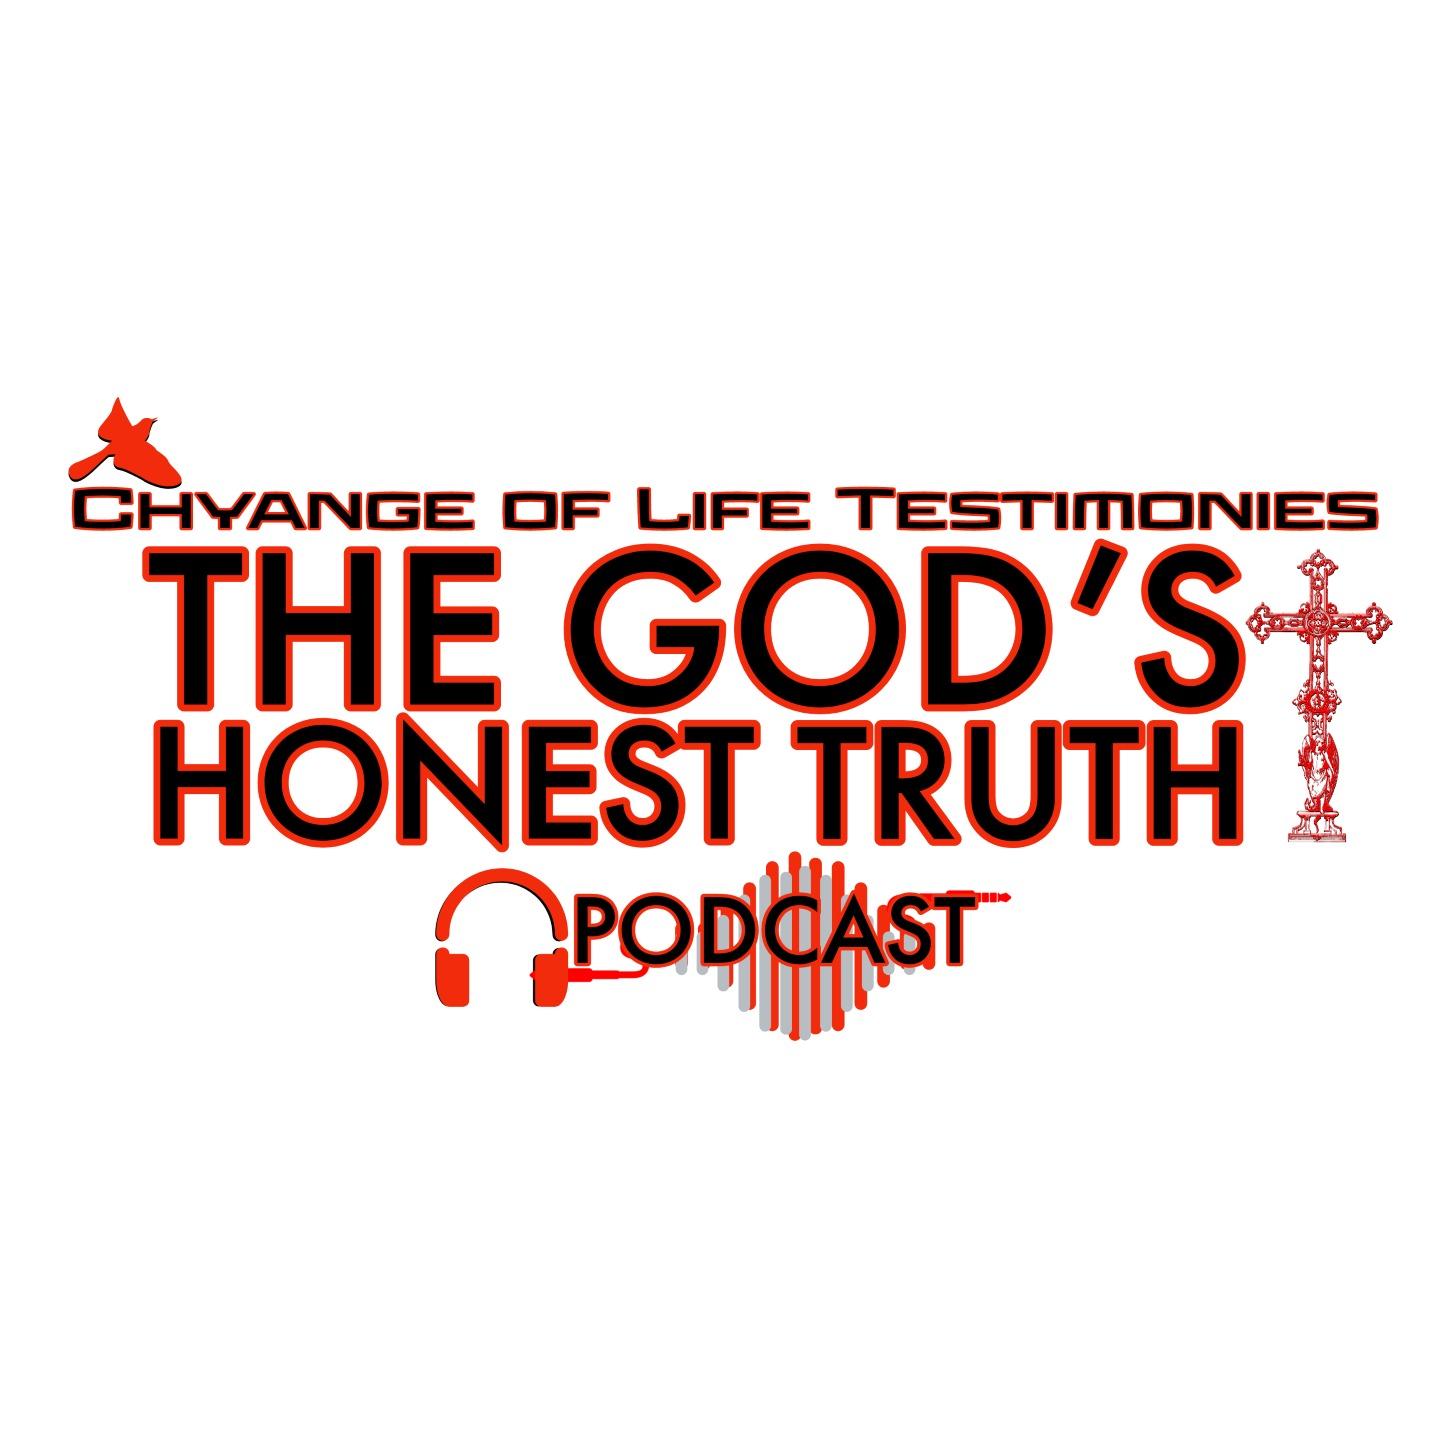 Chyange of life Testimonies " The God's Honest truth"